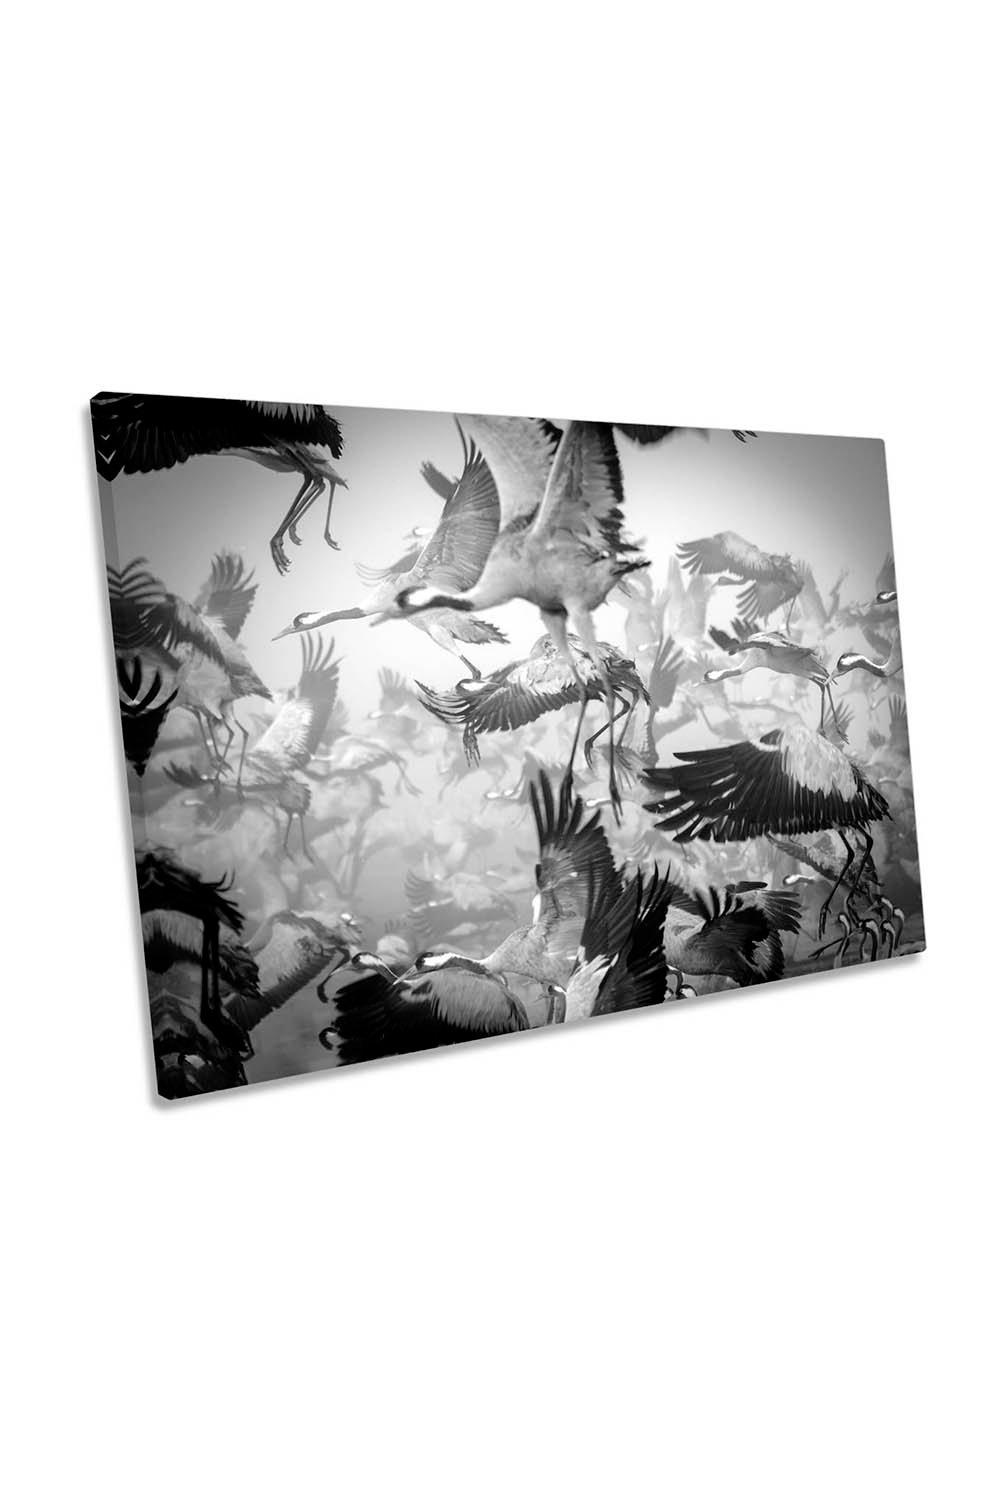 Chaos Crane Birds Migration Canvas Wall Art Picture Print